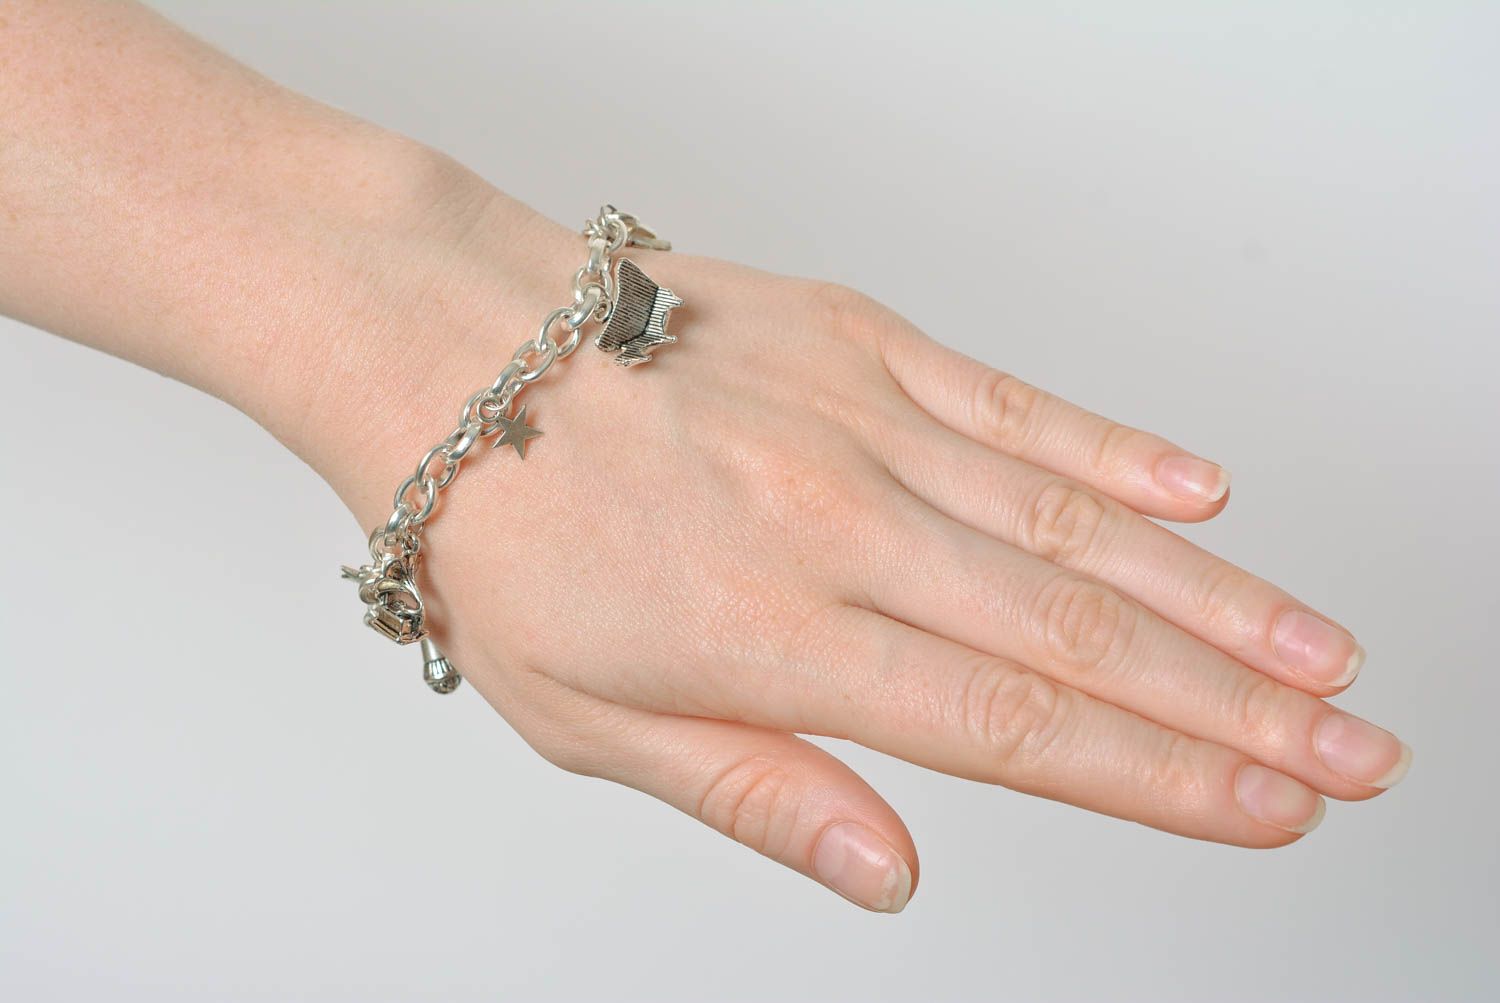 Metal bracelet homemade jewelry designer accessories charm bracelet cool gifts photo 3